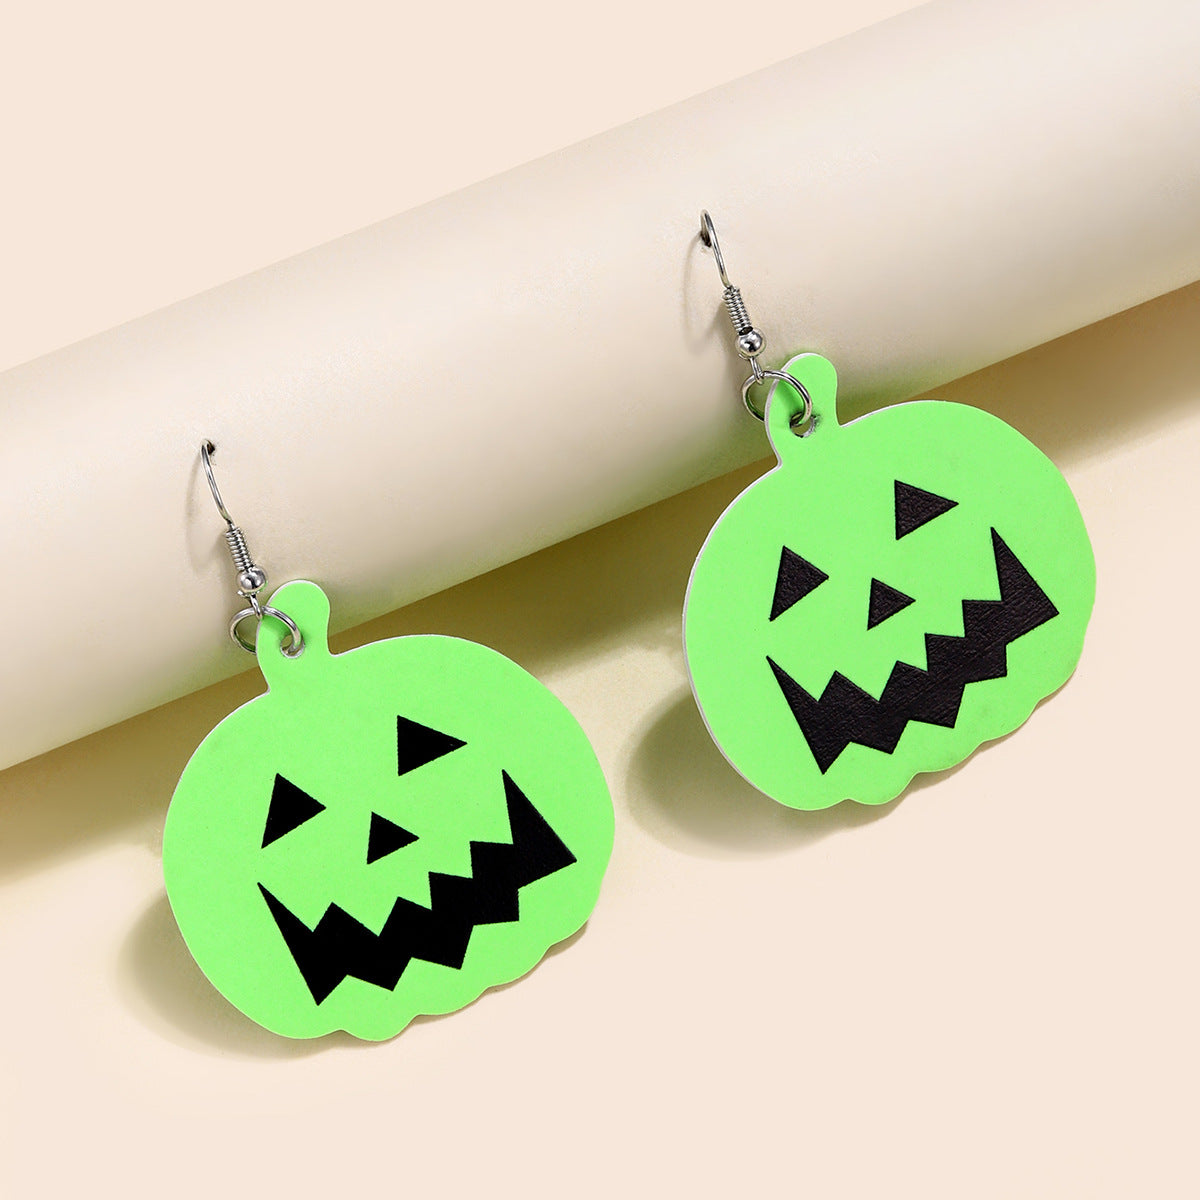 Luminous Spooky Earrings